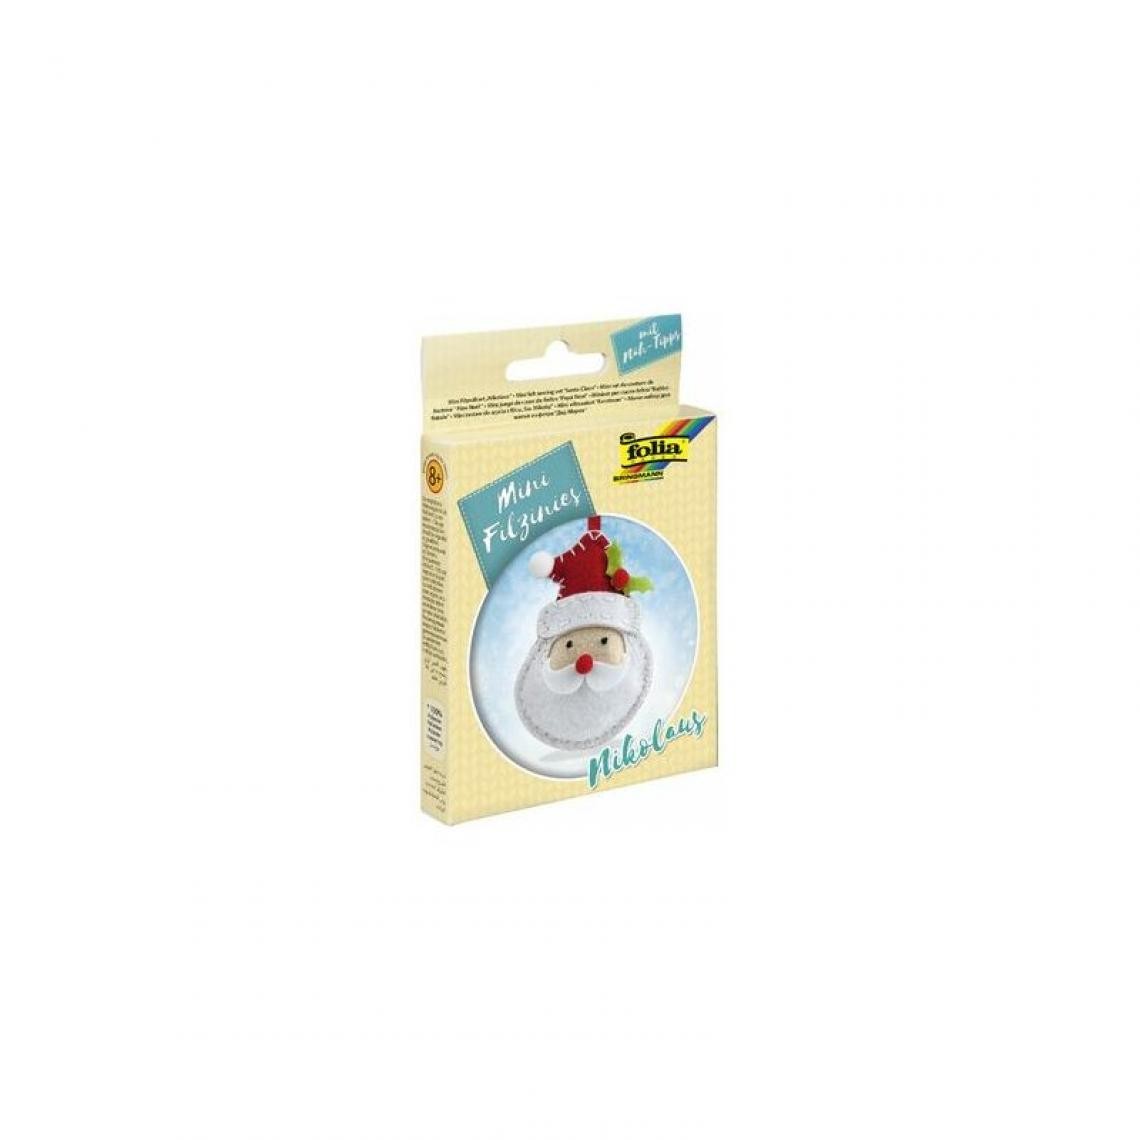 Folia - folia Mini kit de feutrine 'Filzinies', bonhomme de neige () - Bricolage et jardinage